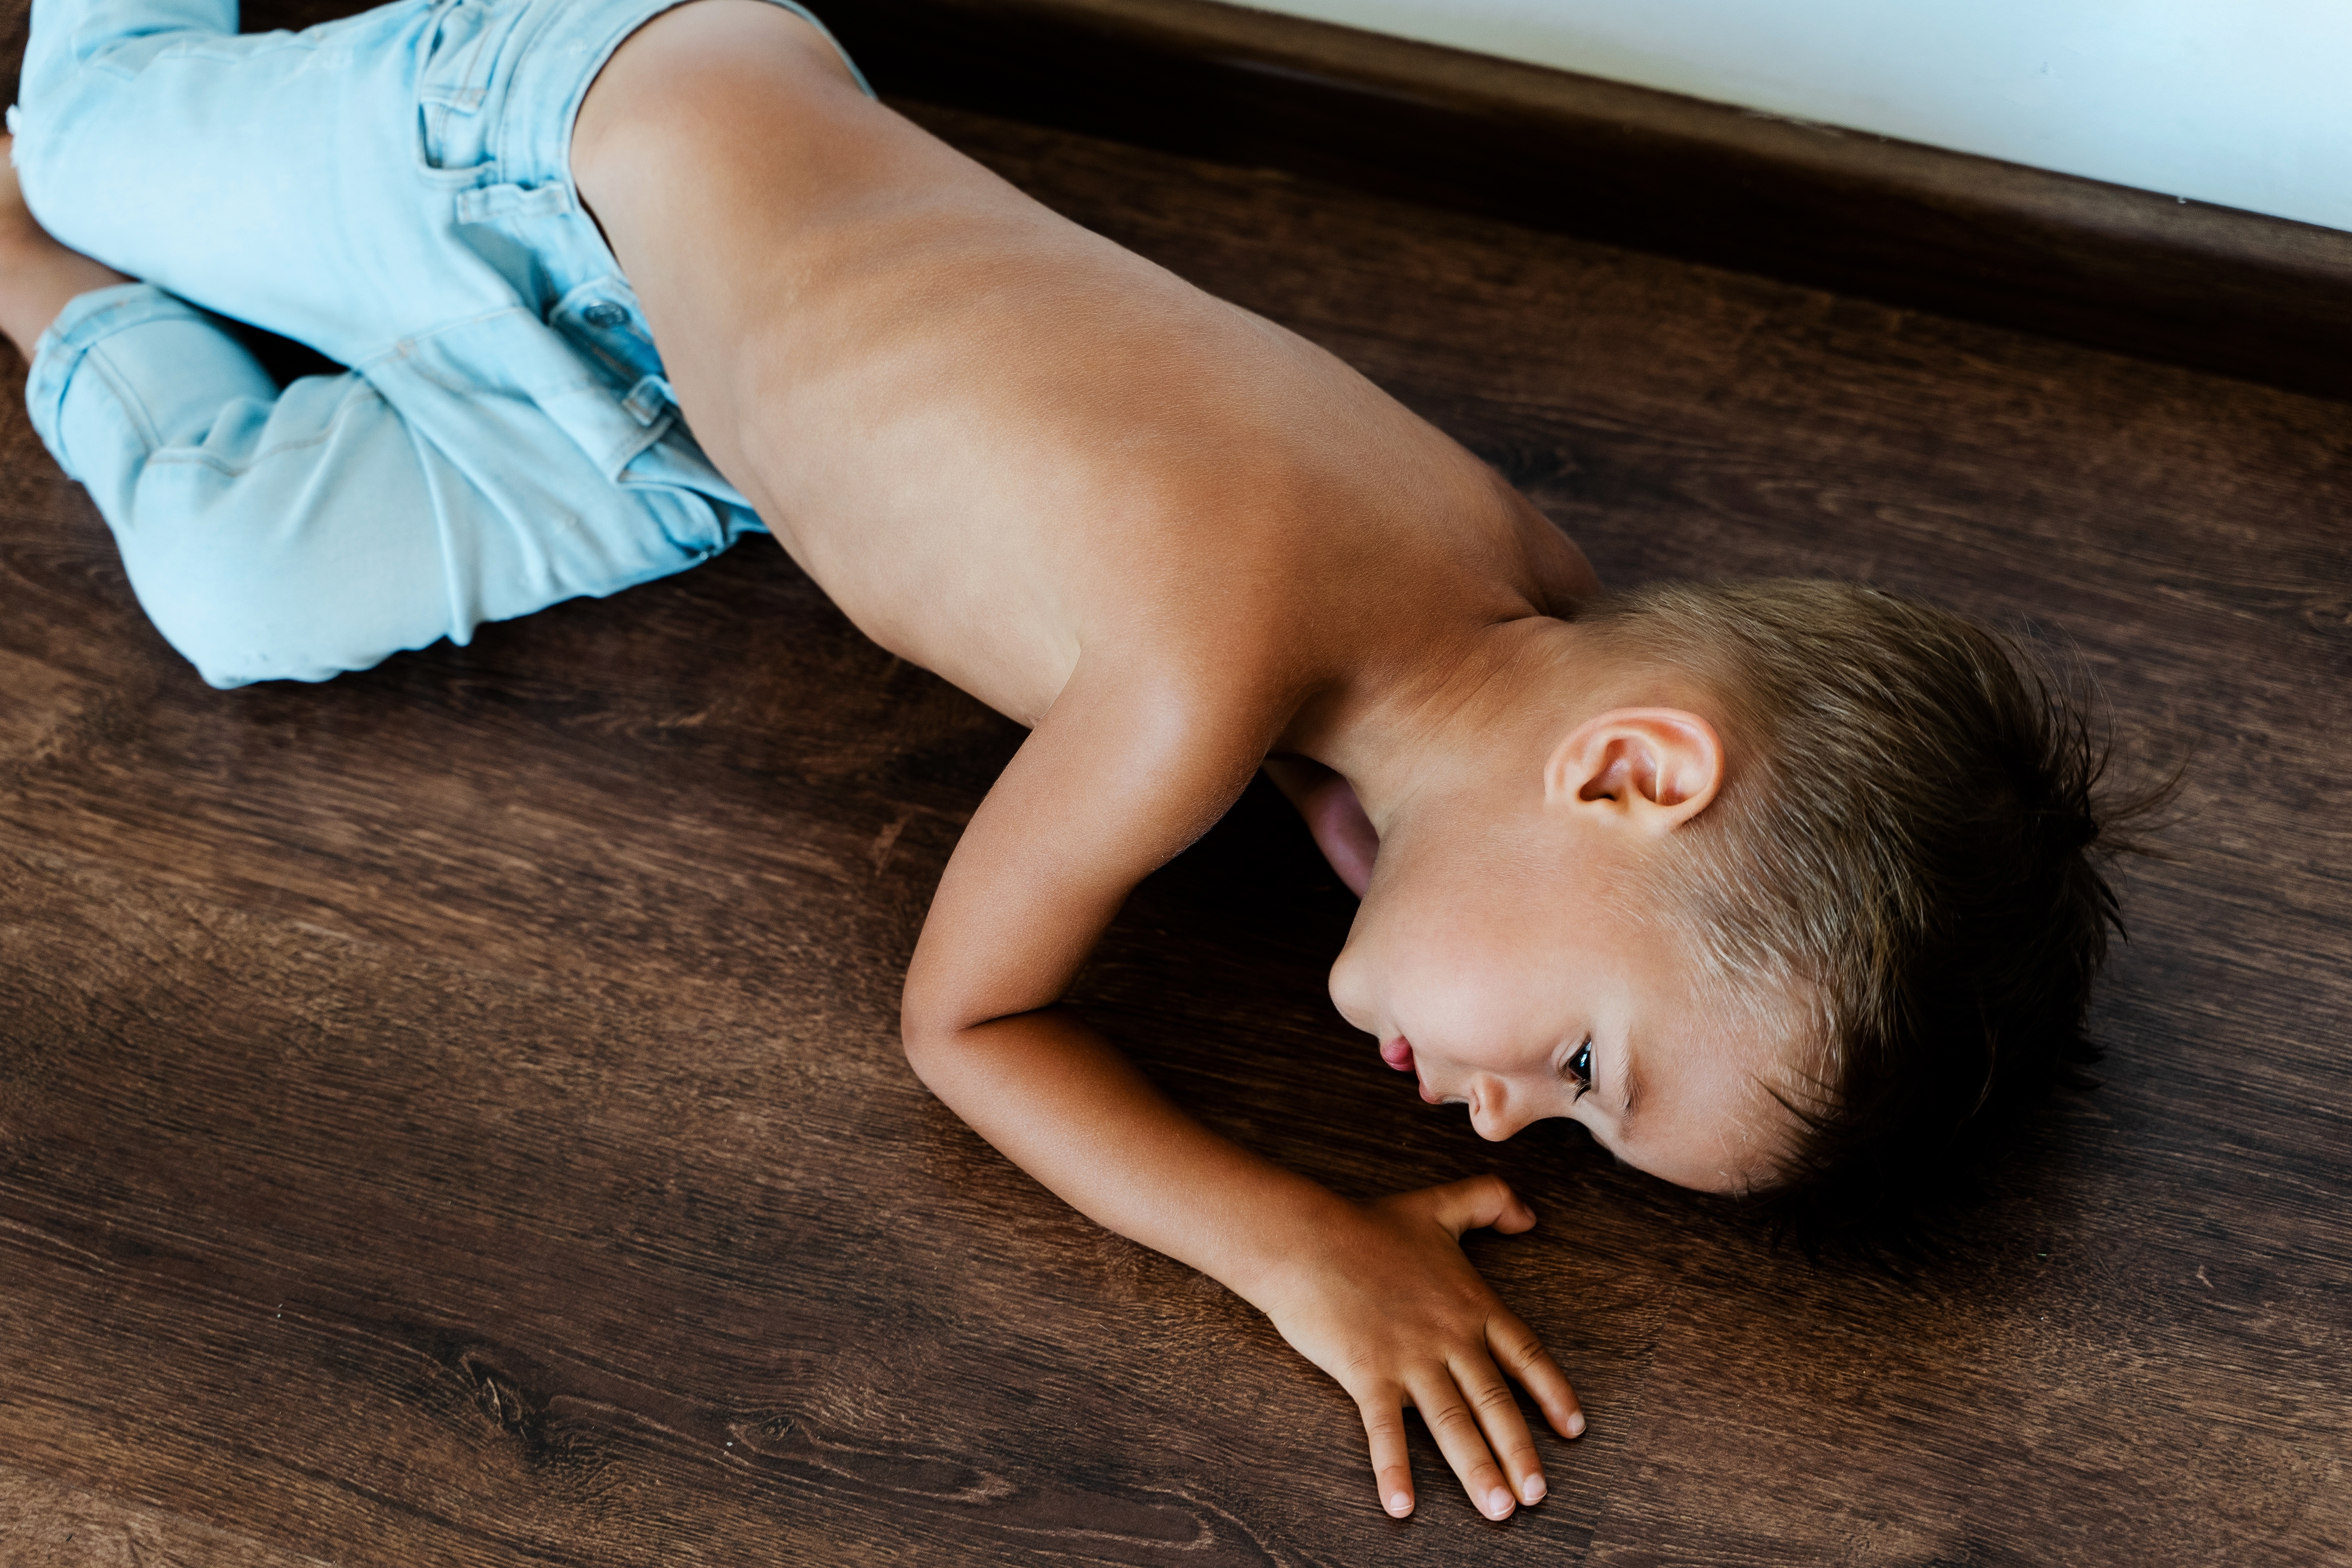 Sad little boy lying on the floor | Source: Shutterstock